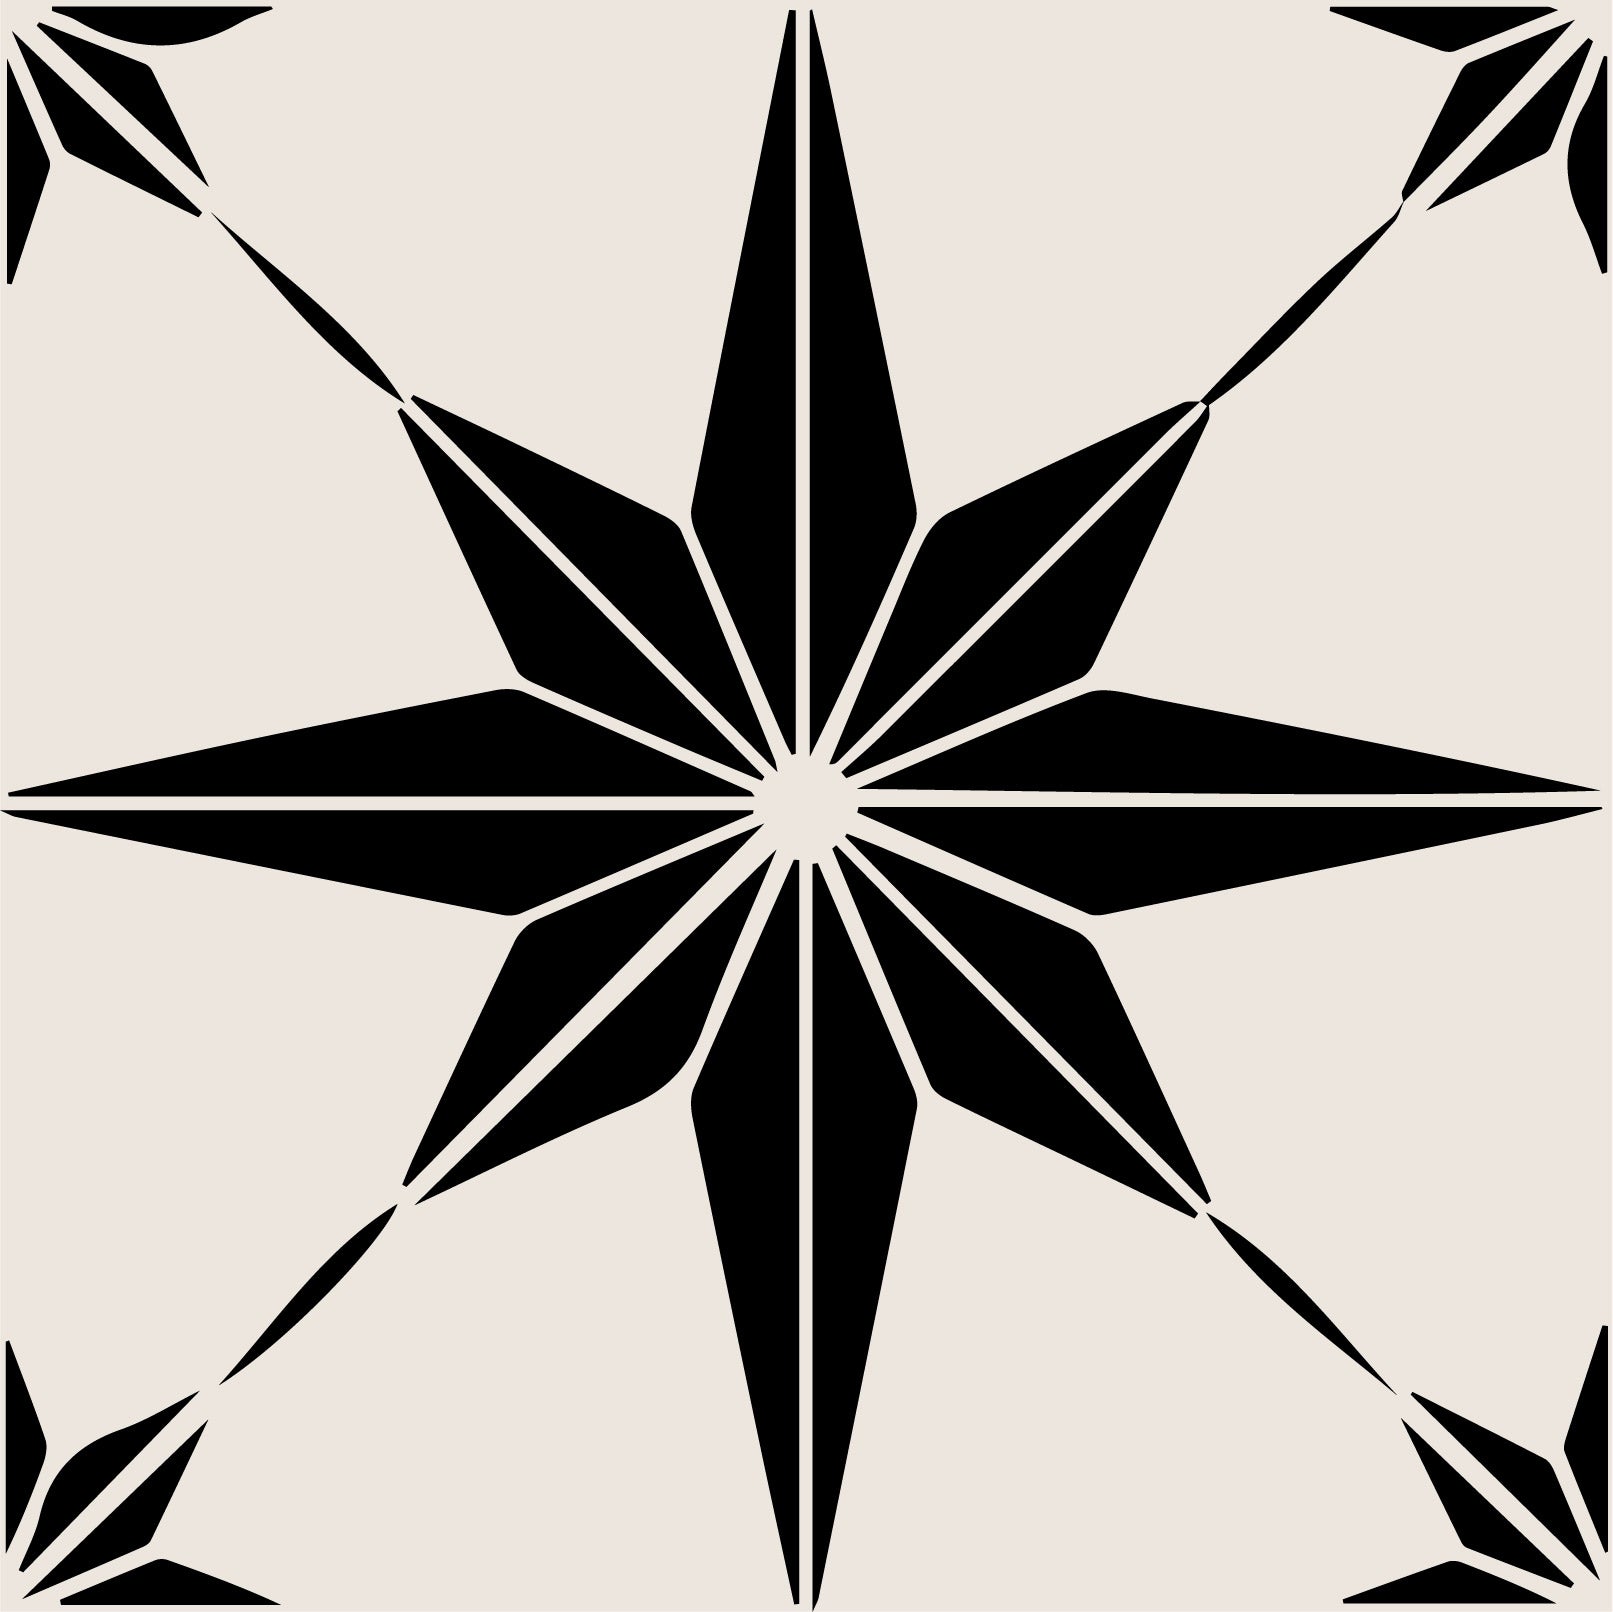 6" x 6" Black and White Mono Cross Peel and Stick Tiles - Tuesday Morning-Peel and Stick Tiles